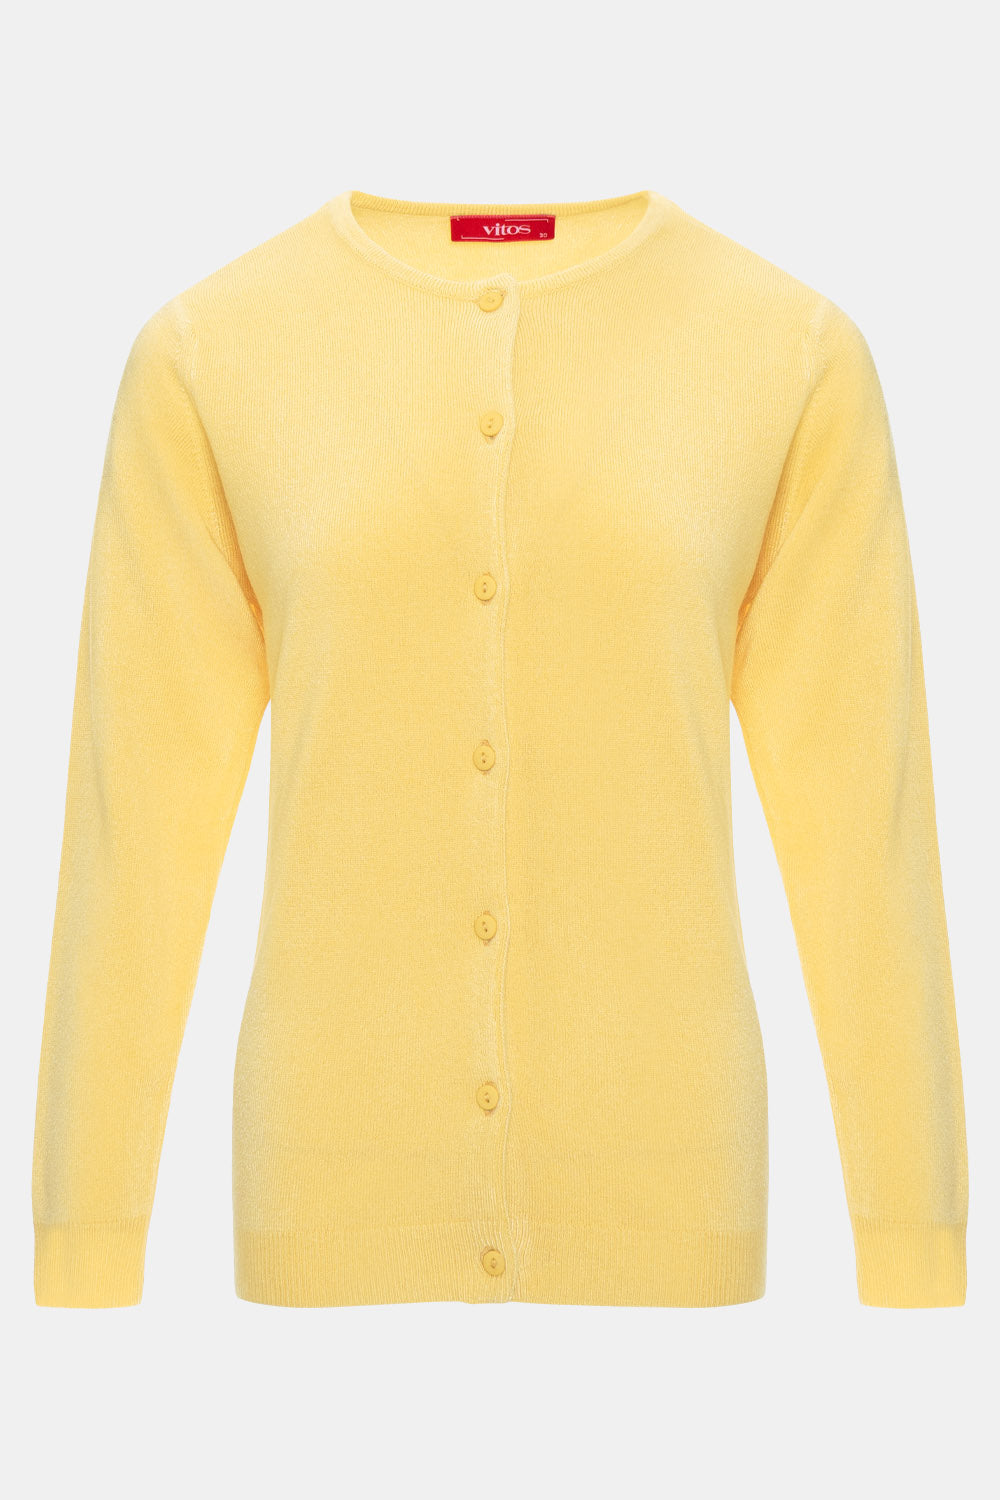 Suéter escote redondo  - C6008